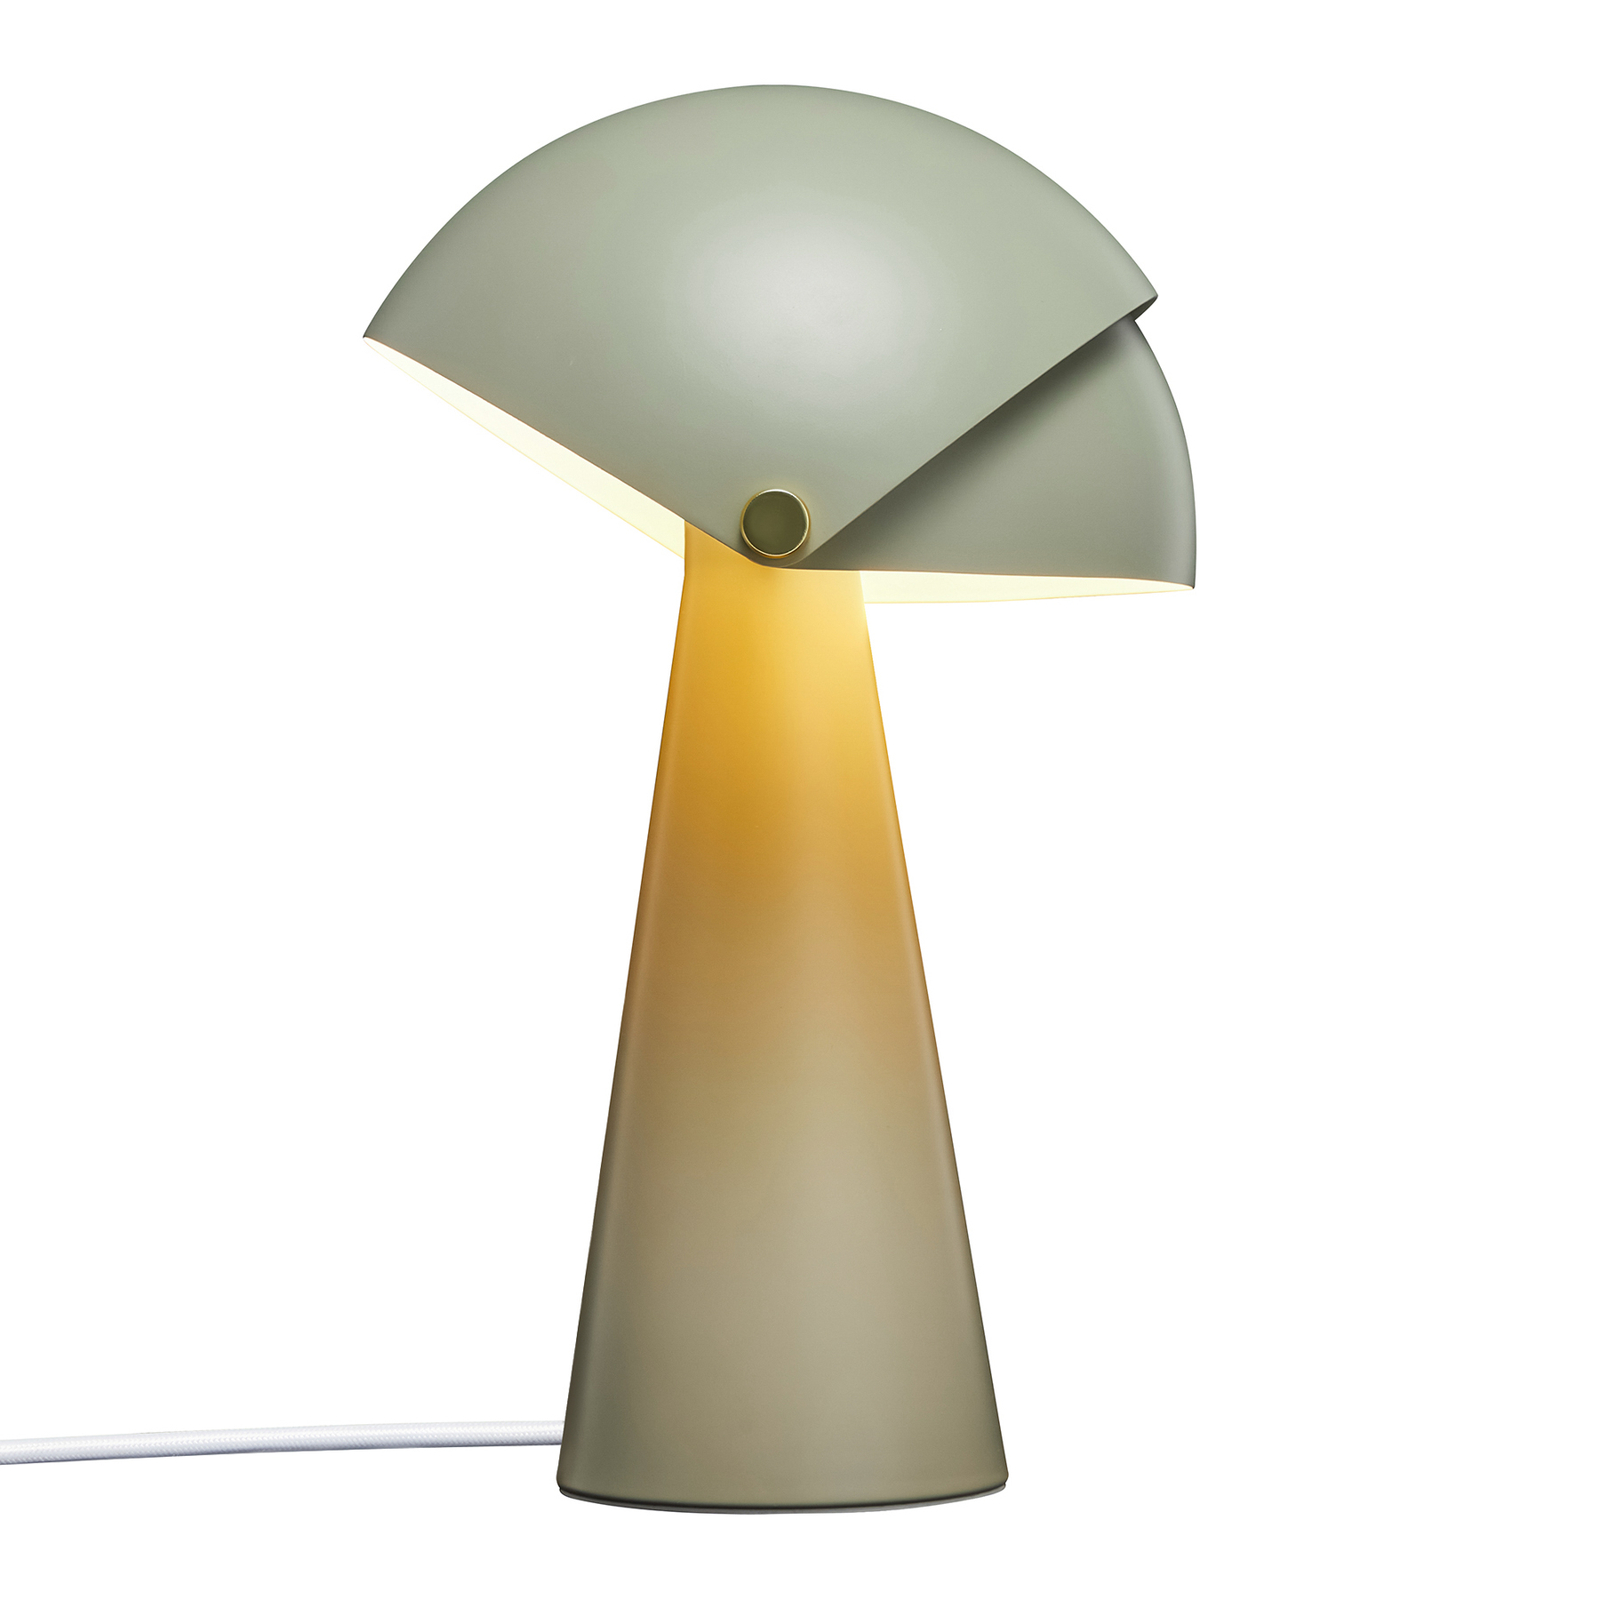 "Align" stalinė lempa su pakreipiamu gaubtu, žalia